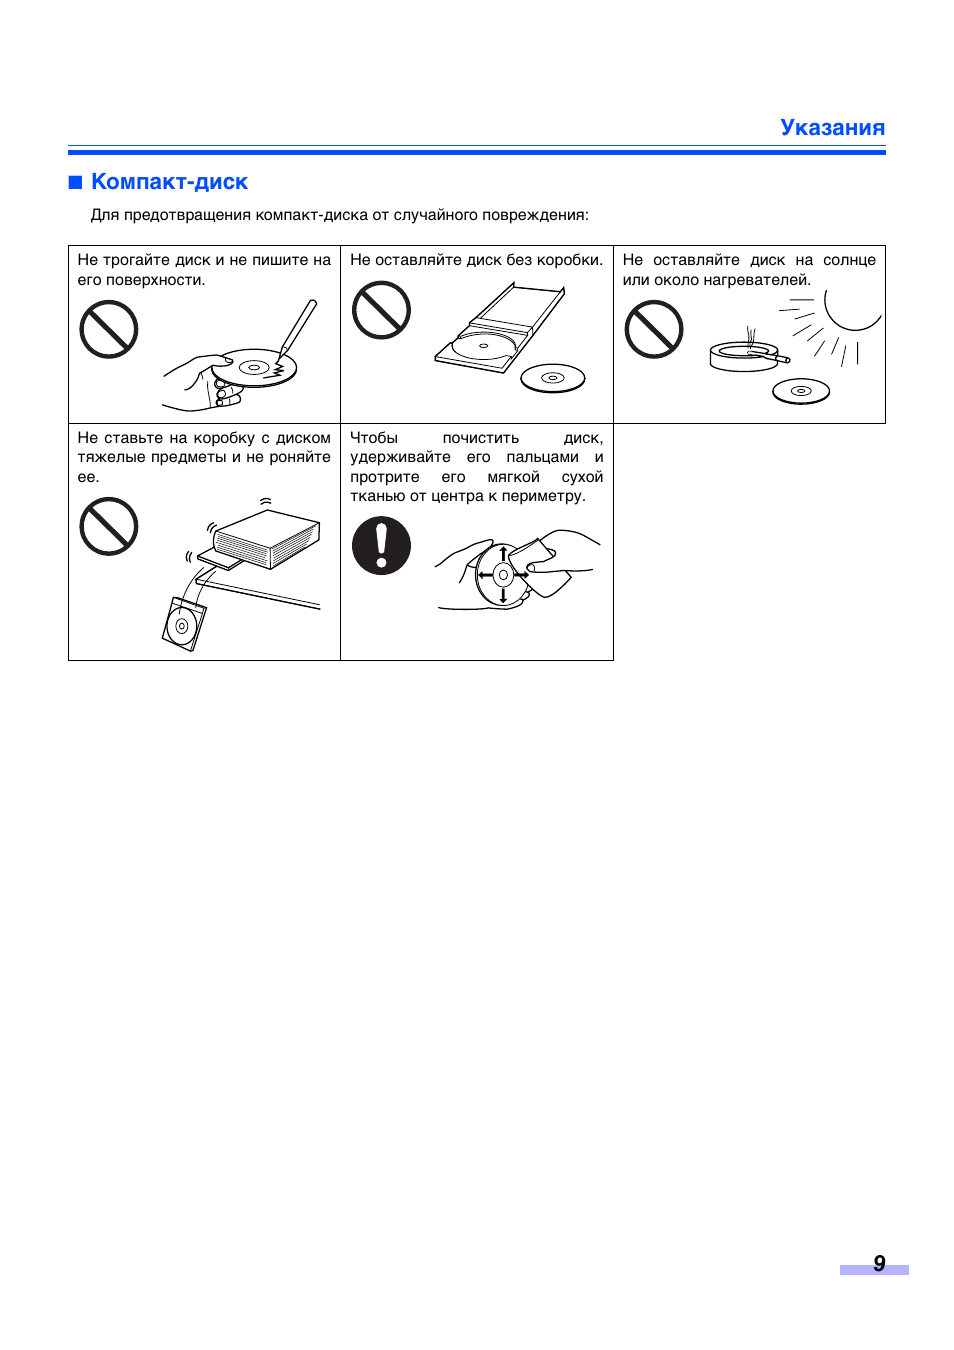 Указания 9, Компакт-диск | Инструкция по эксплуатации Panasonic KV-S3105 | Страница 9 / 61